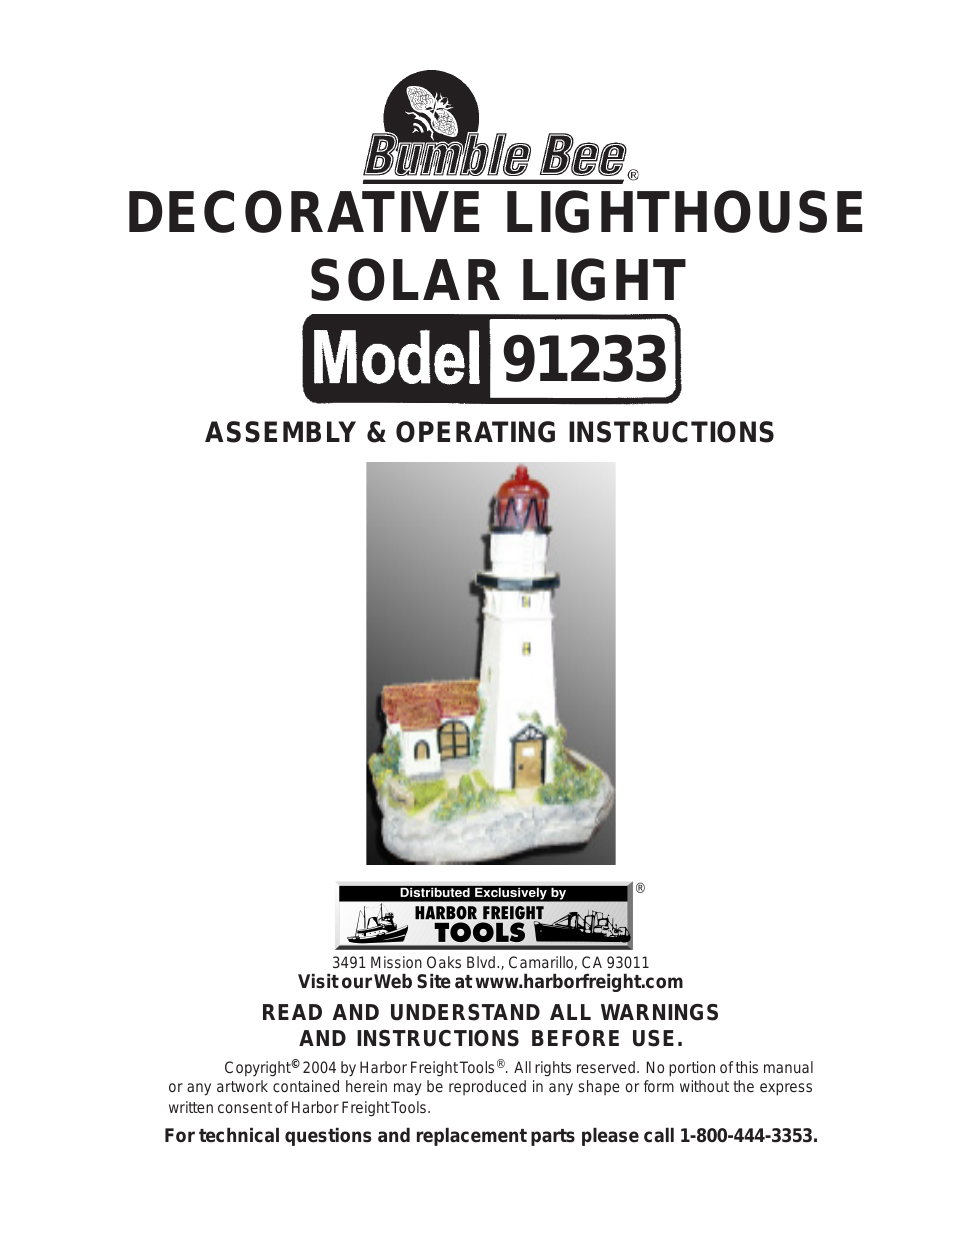 Decorative Lighthouse Solar Light 91233